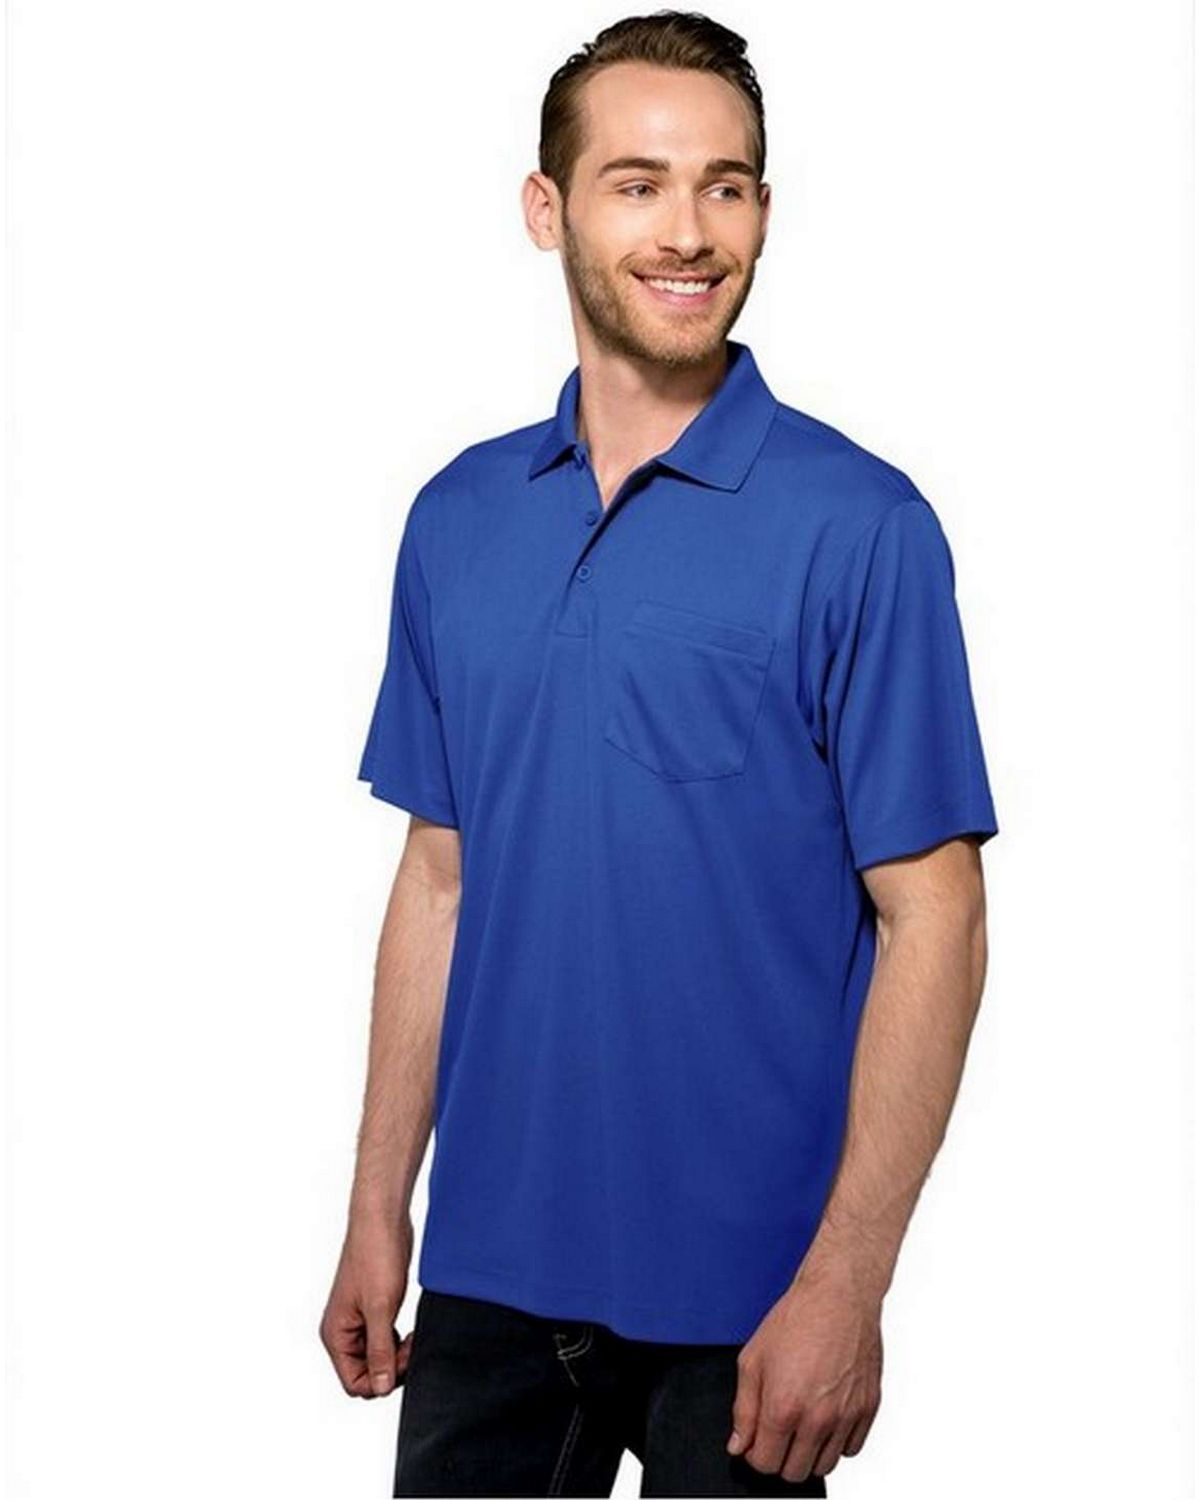 Tri-Mountain Performance K020P Men's 100% Polyester Knit Golf shirt